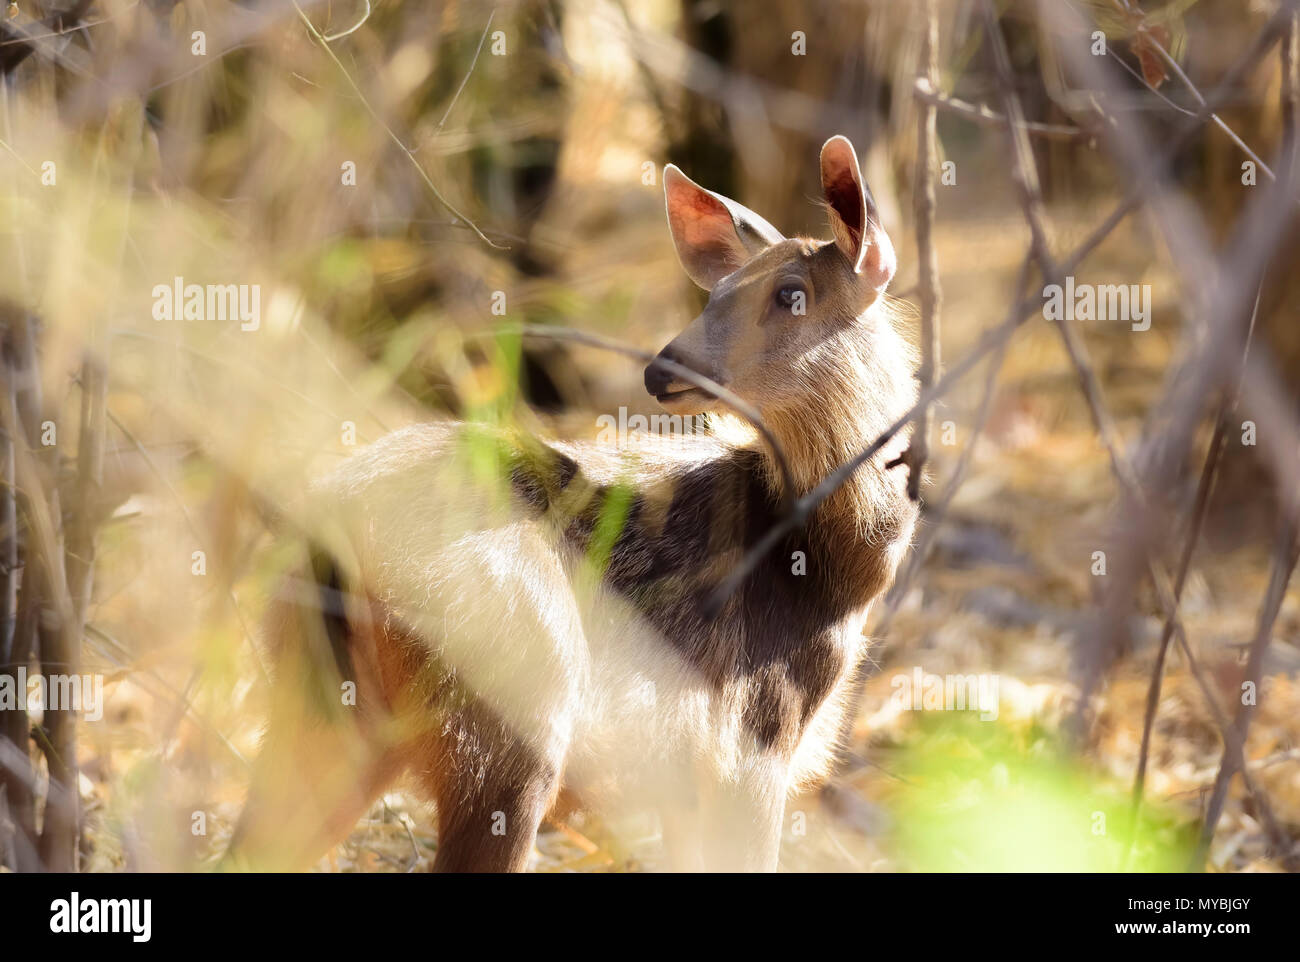 A Sambar Deer peeking through bush inside Tadoba Reserve Forest of India, copy space Stock Photo